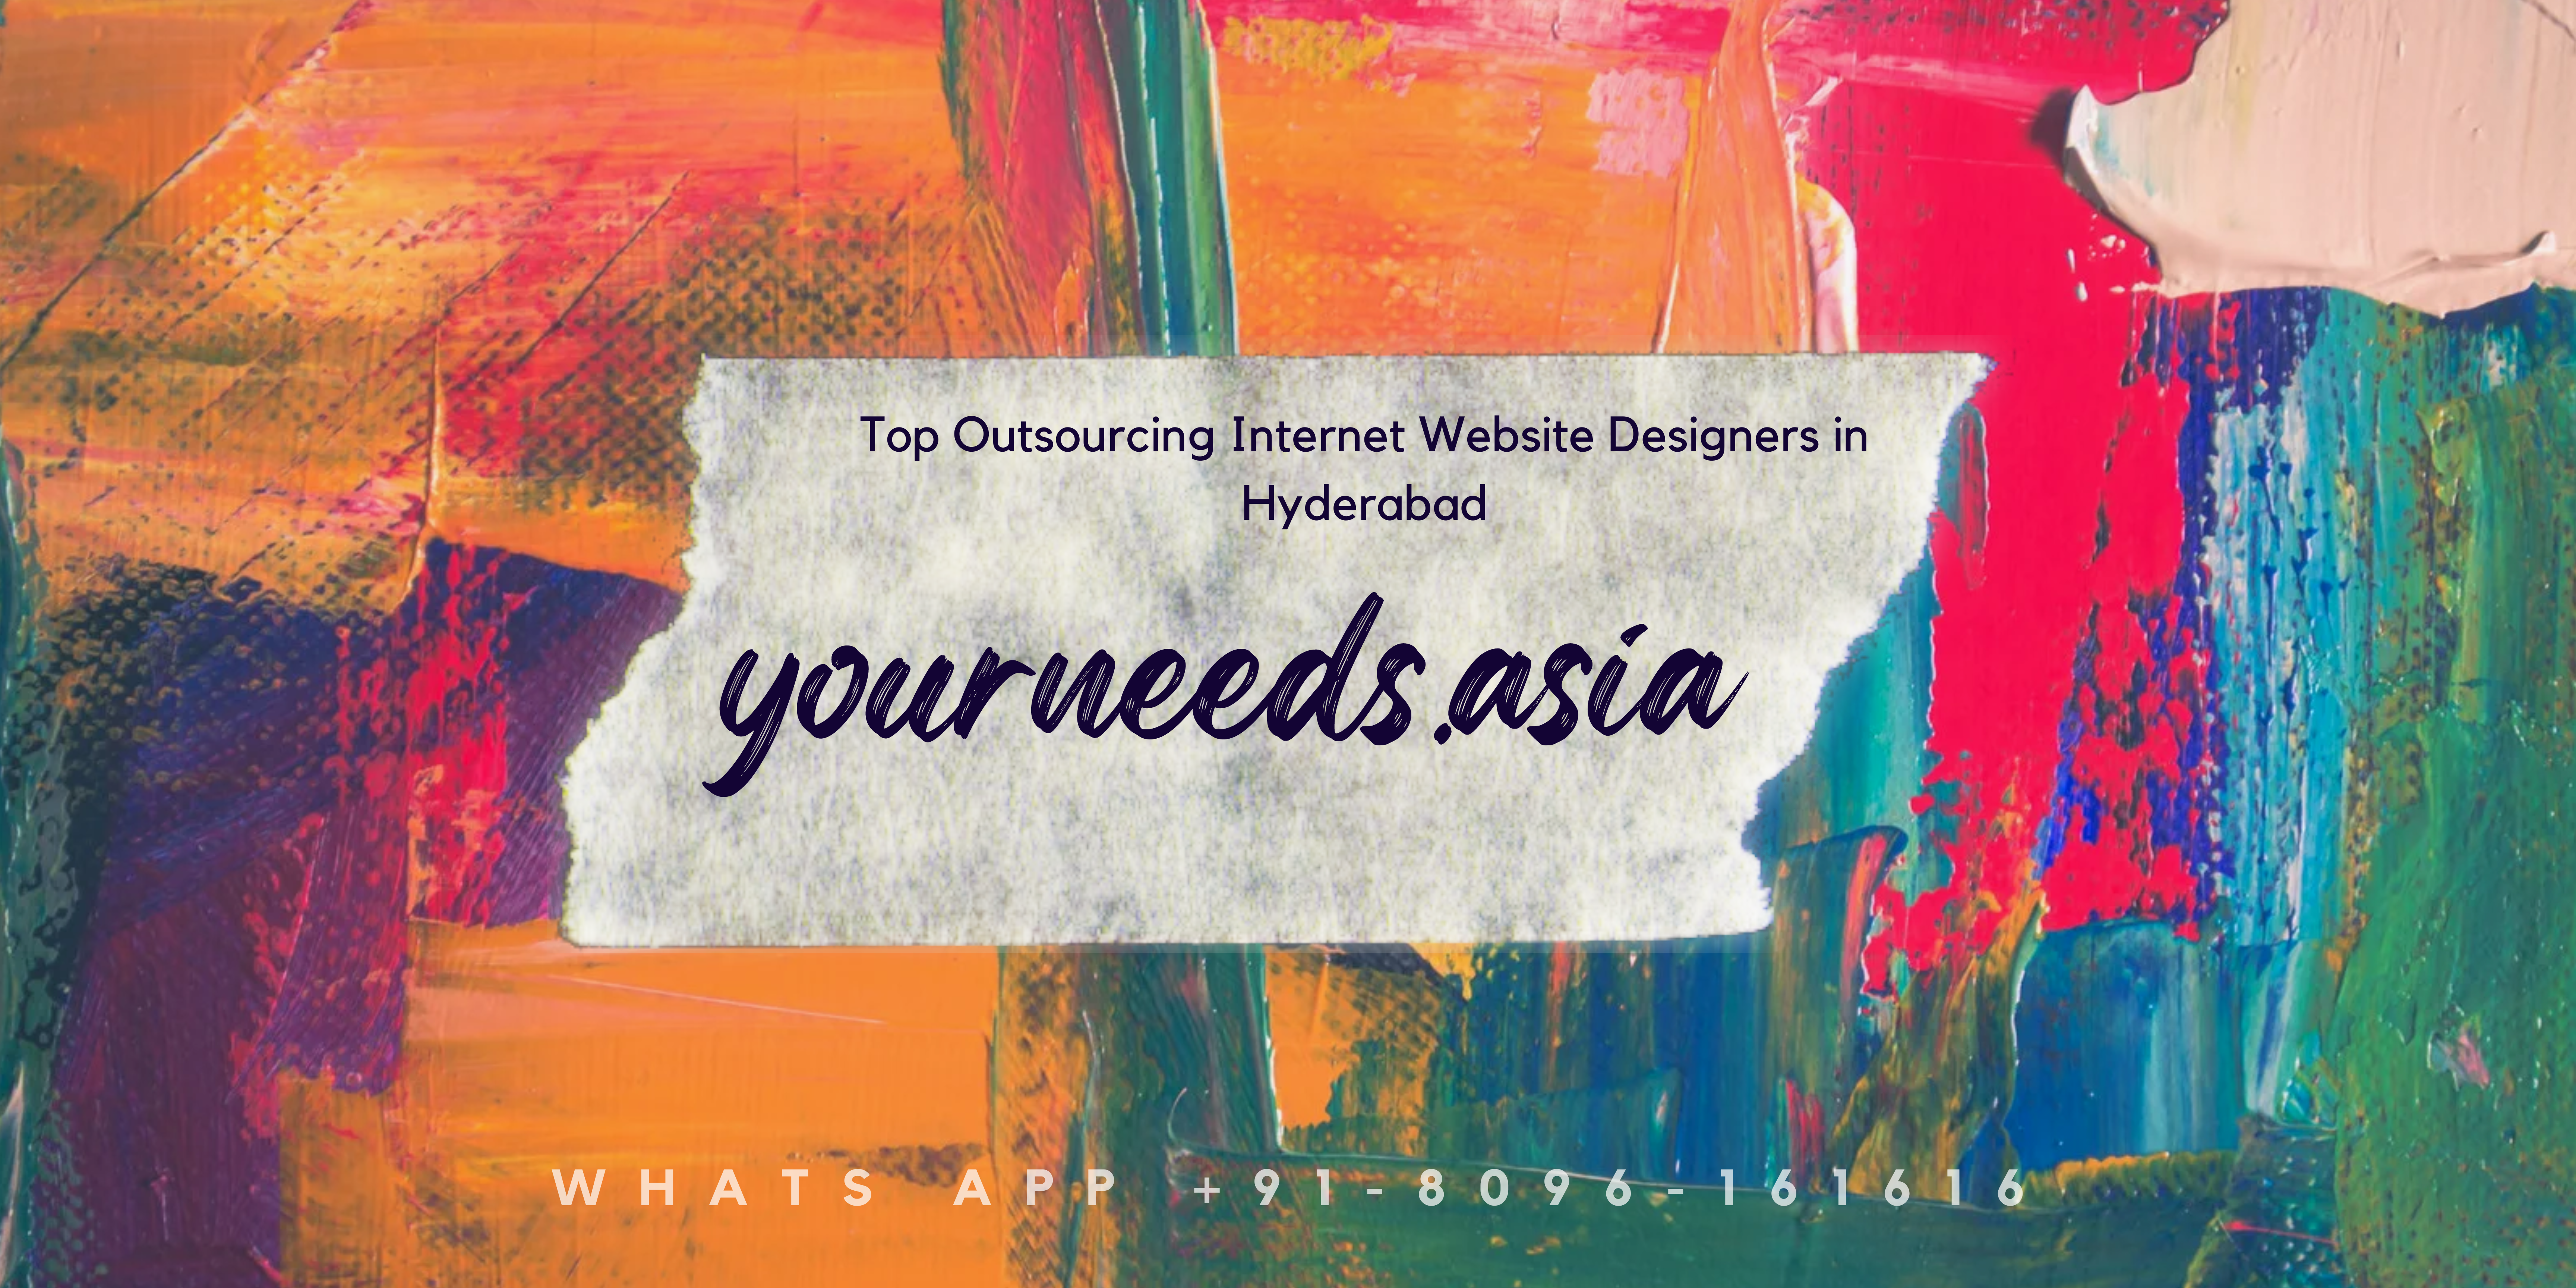 Top Outsourcing Internet Website Designers in Hyderabad